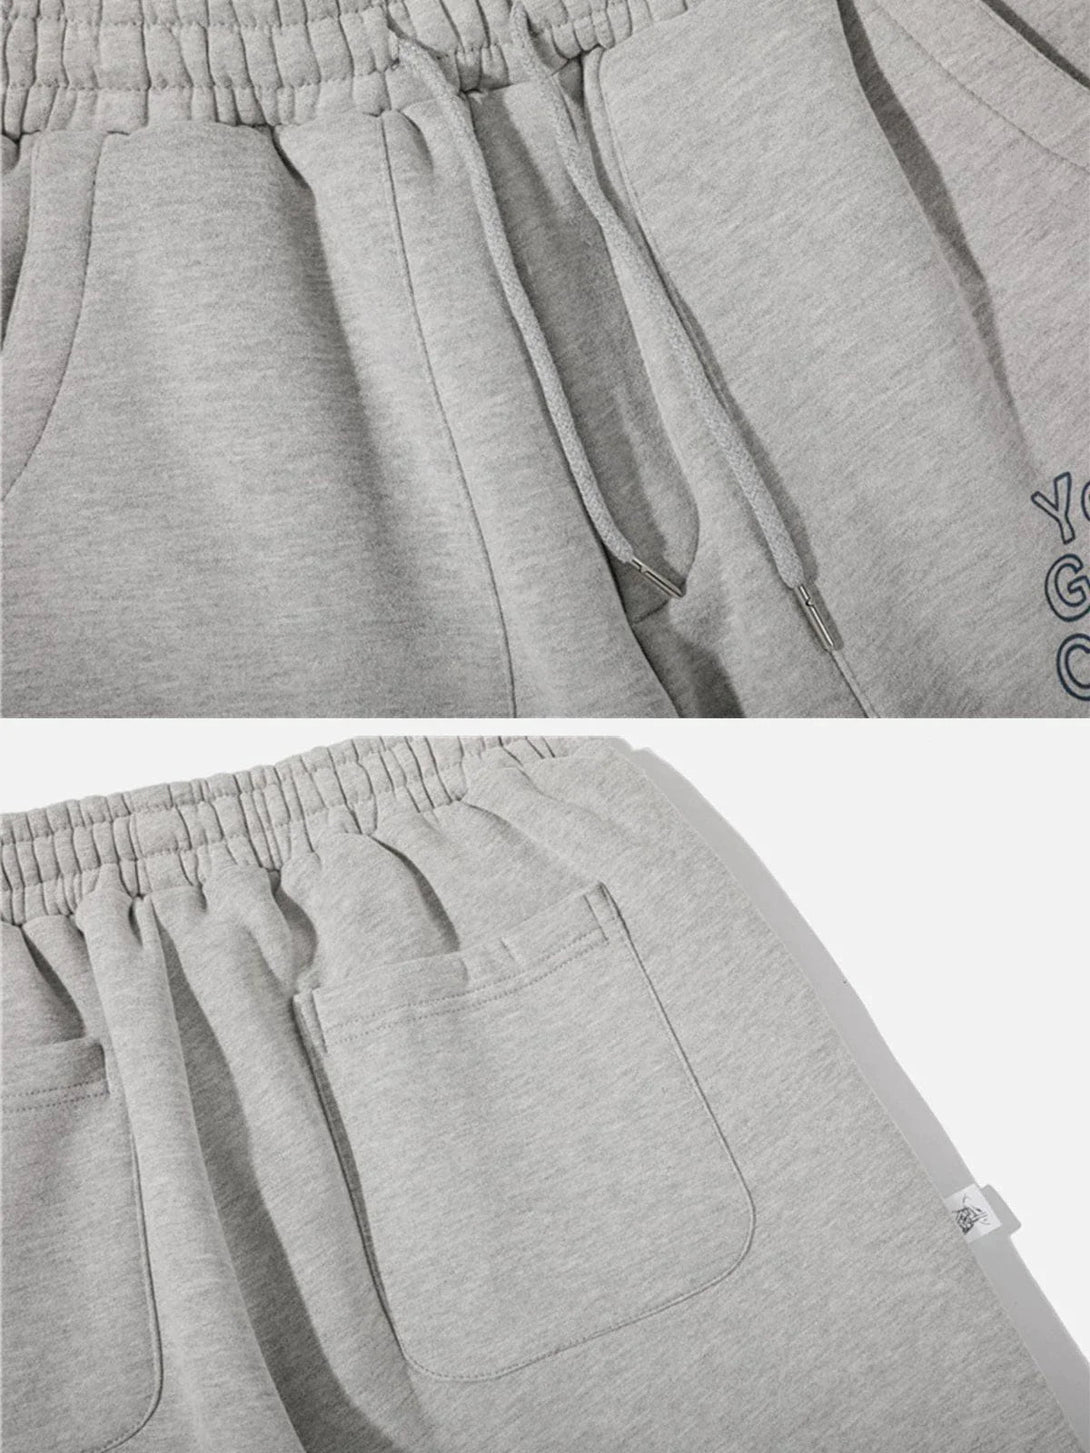 Majesda® - Printed Drawstring Pants outfit ideas streetwear fashion